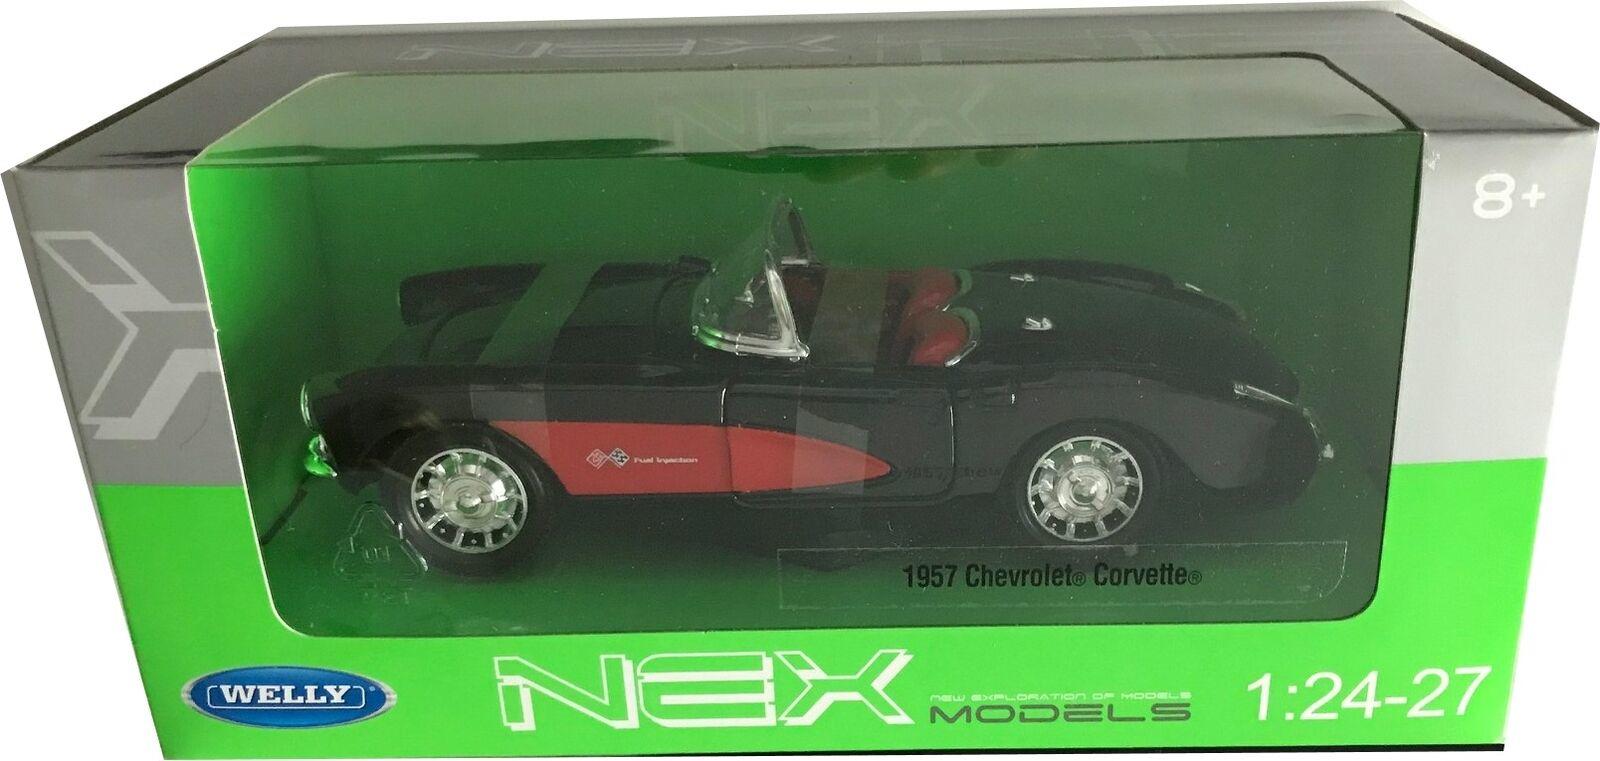 chevrolet corvette convertible